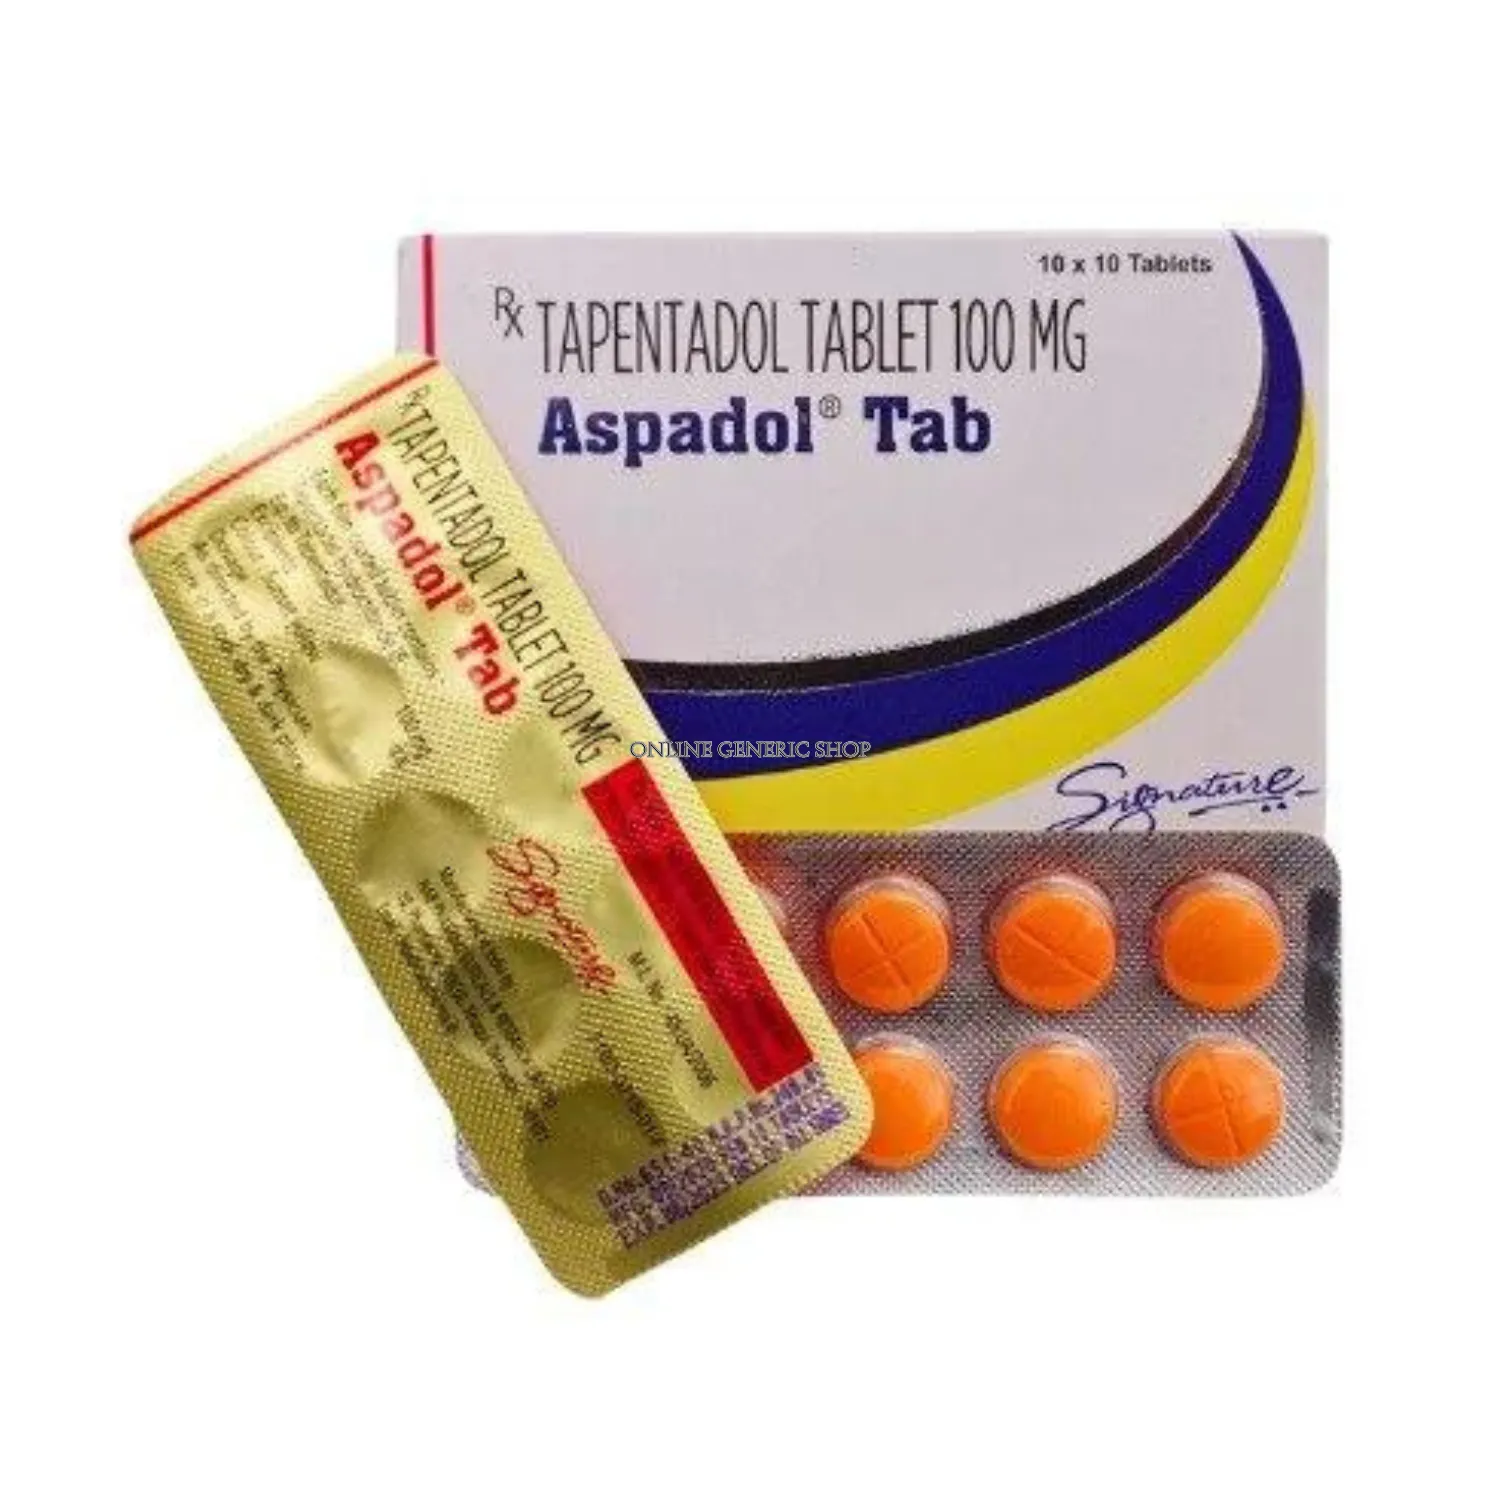 aspadol-100-mg                    